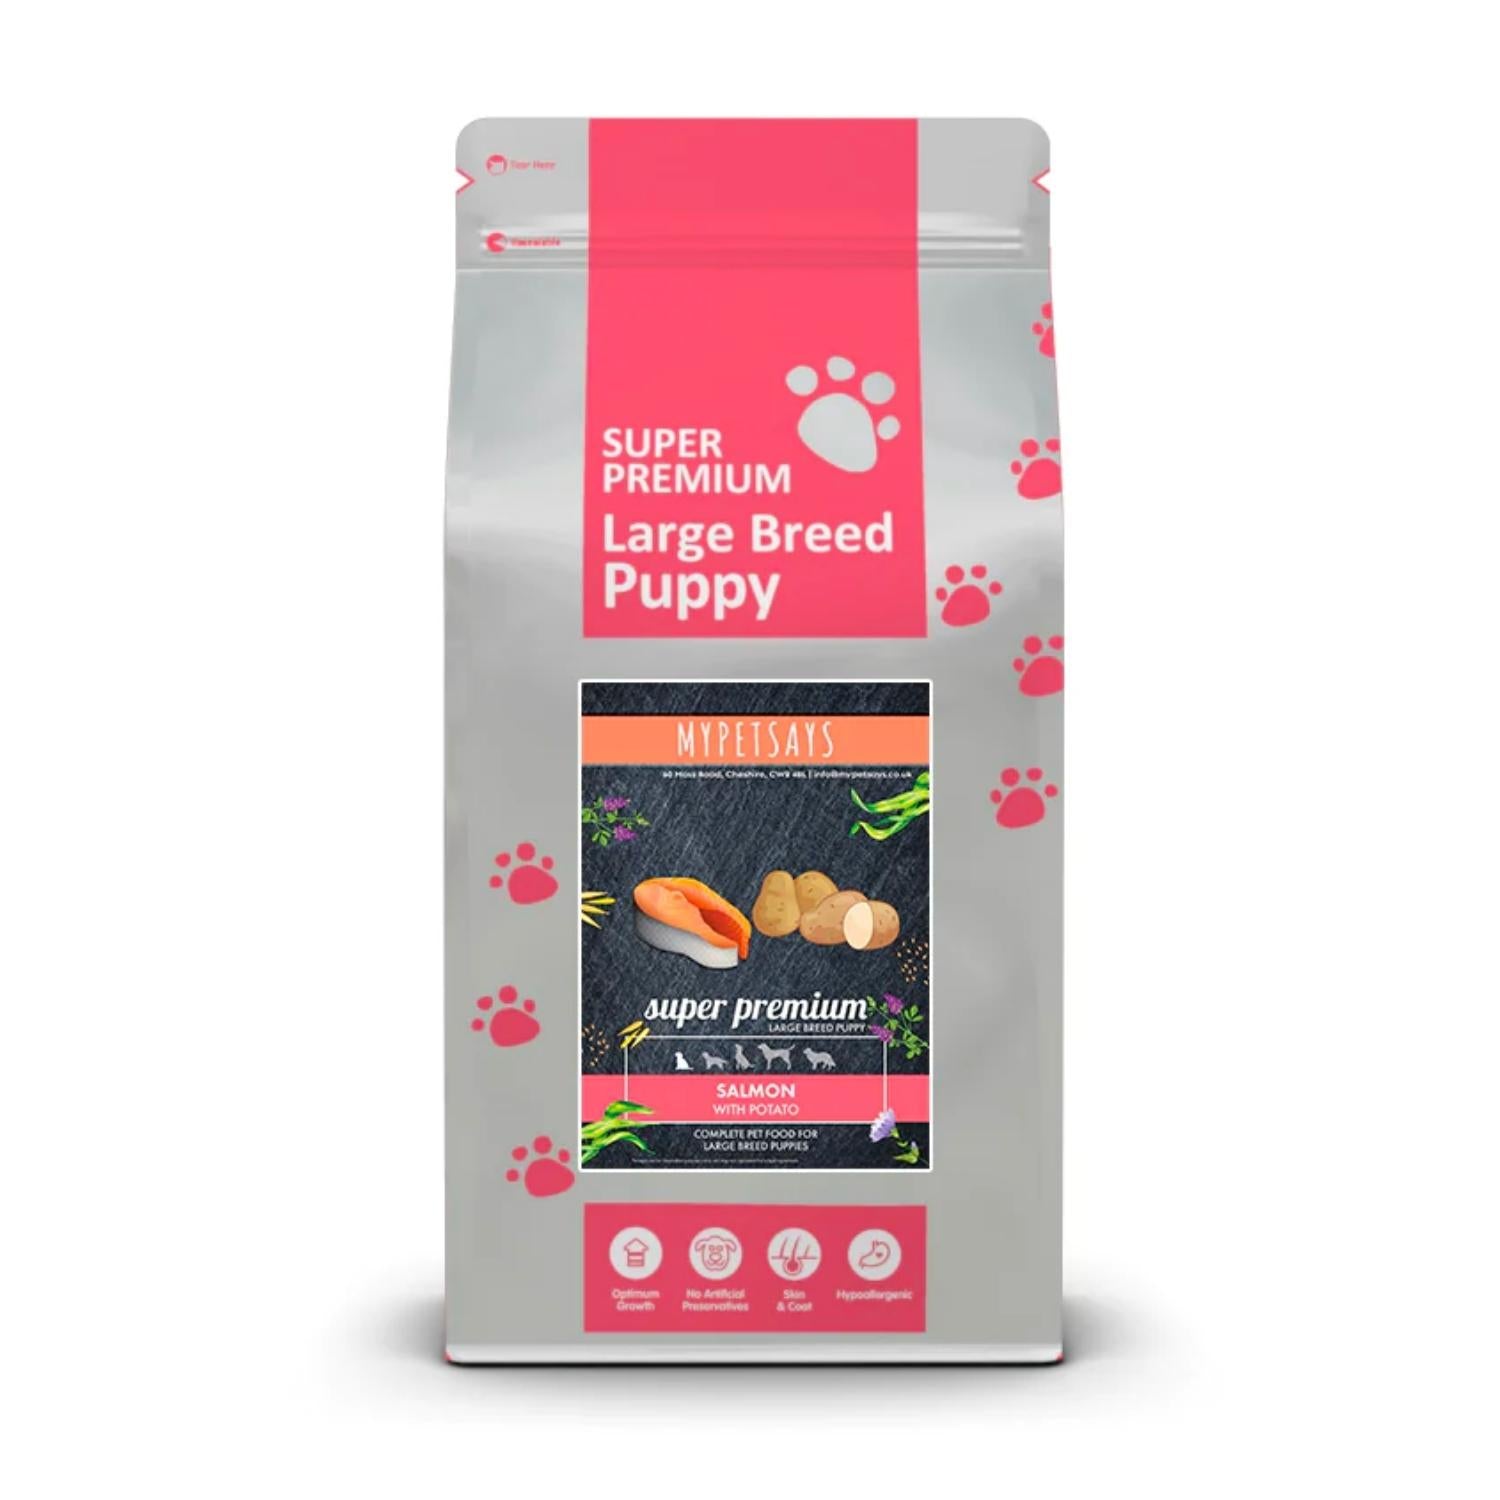 Super Premium Large Breed Puppy Food - Salmon & Potato